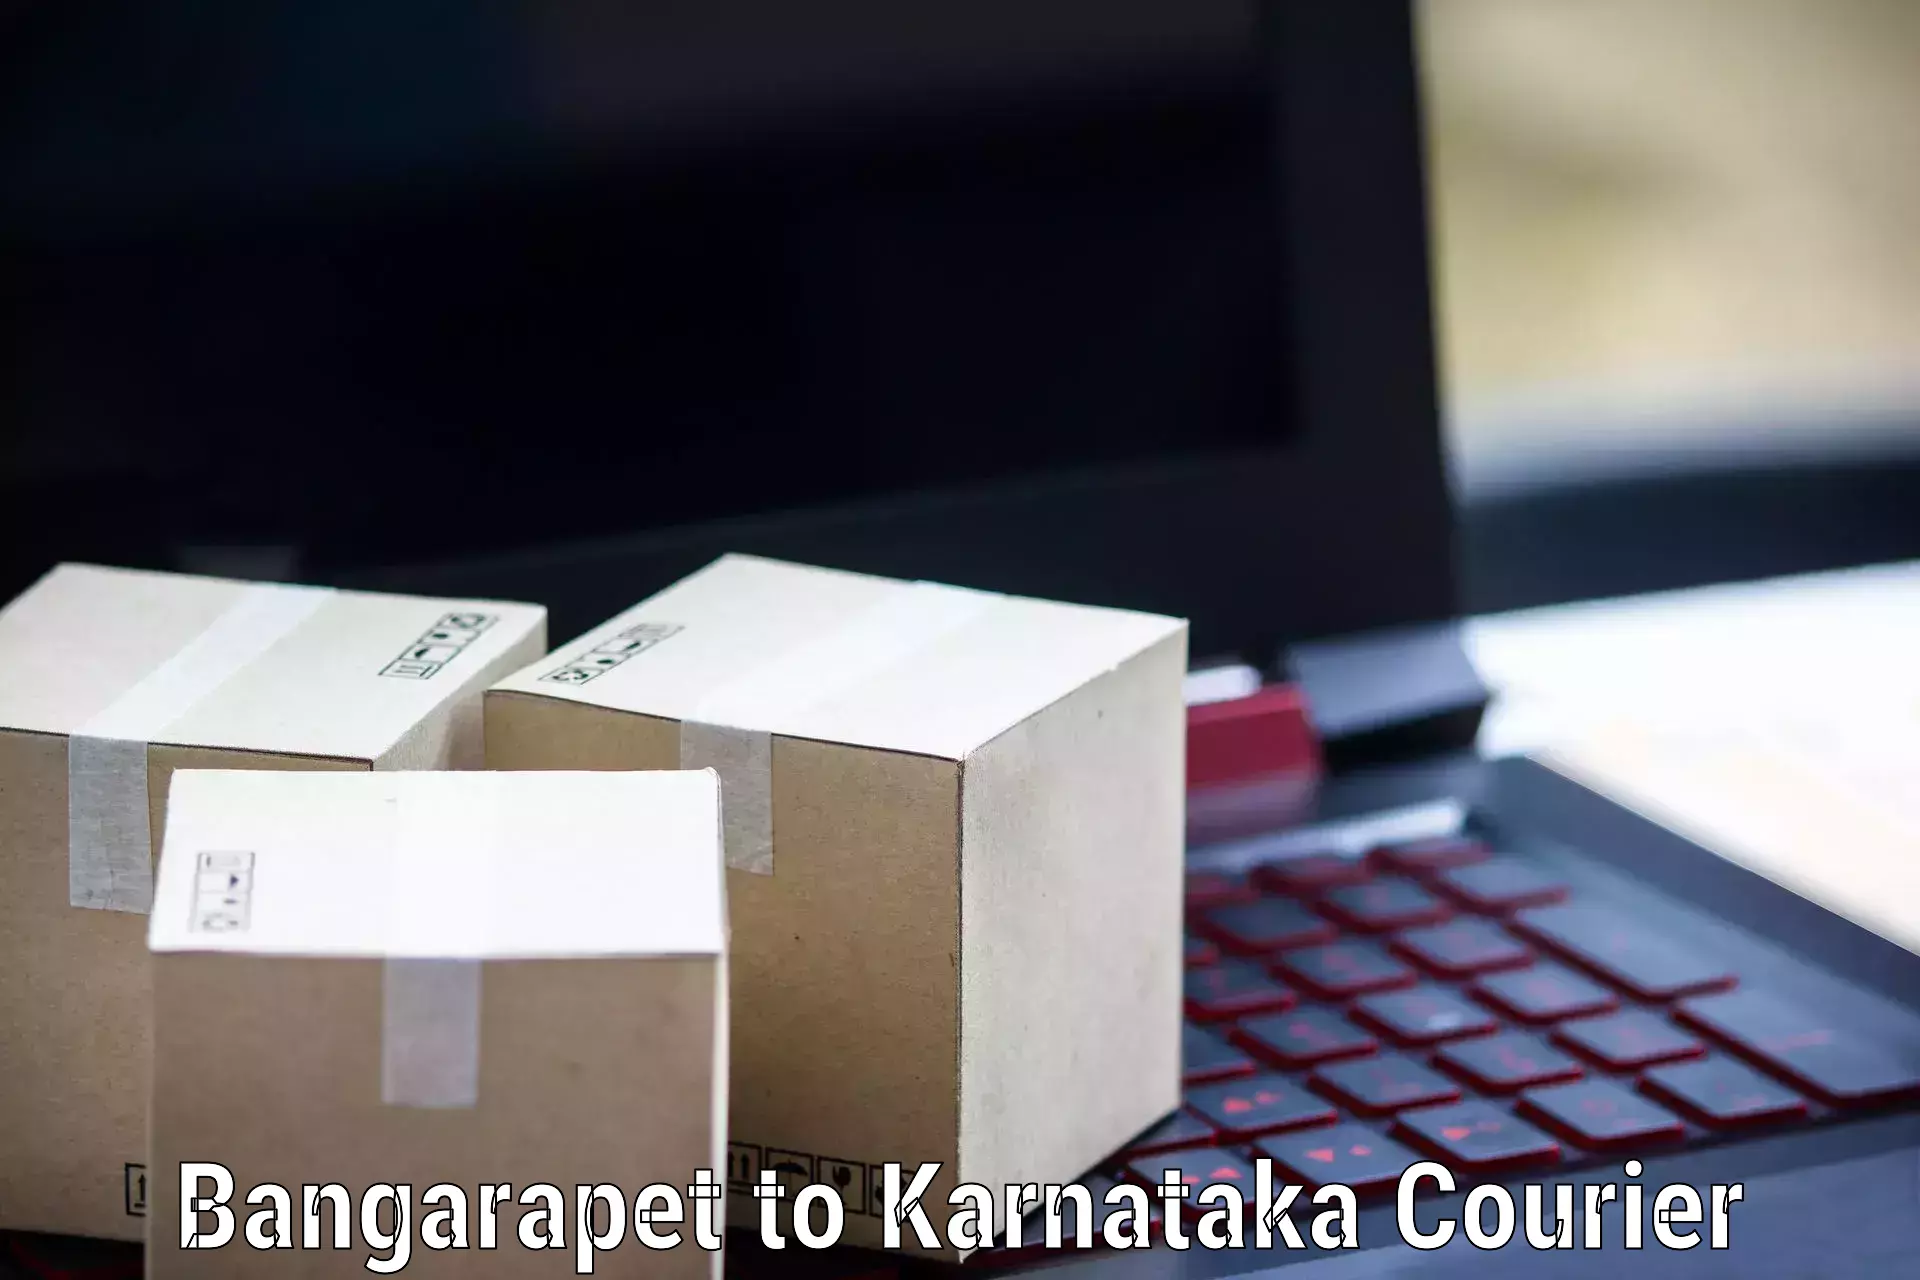 Package delivery network Bangarapet to Kushalnagar